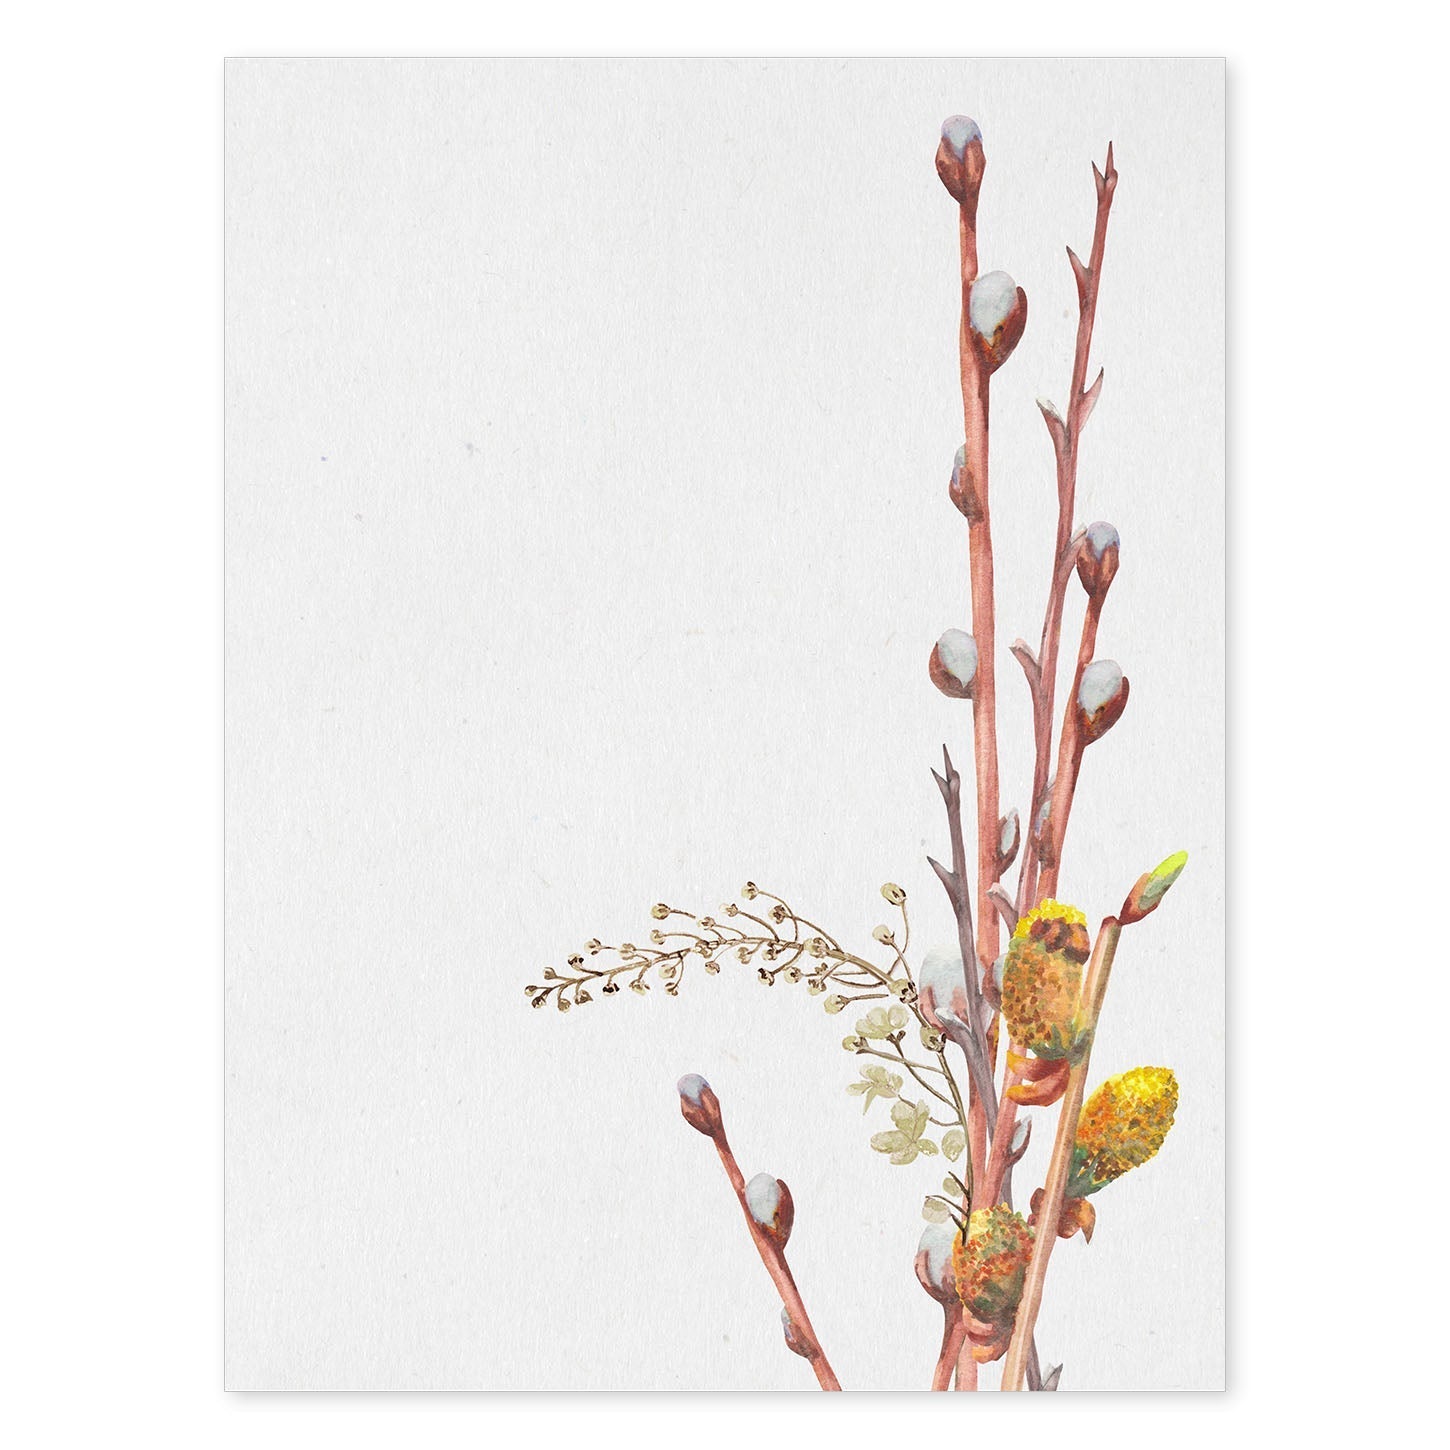 Poster de ramas con estilo de óleo. Lámina Ramas 8, con dibujos pintados de ramas, hojas, y flores.-Artwork-Nacnic-A4-Sin marco-Nacnic Estudio SL